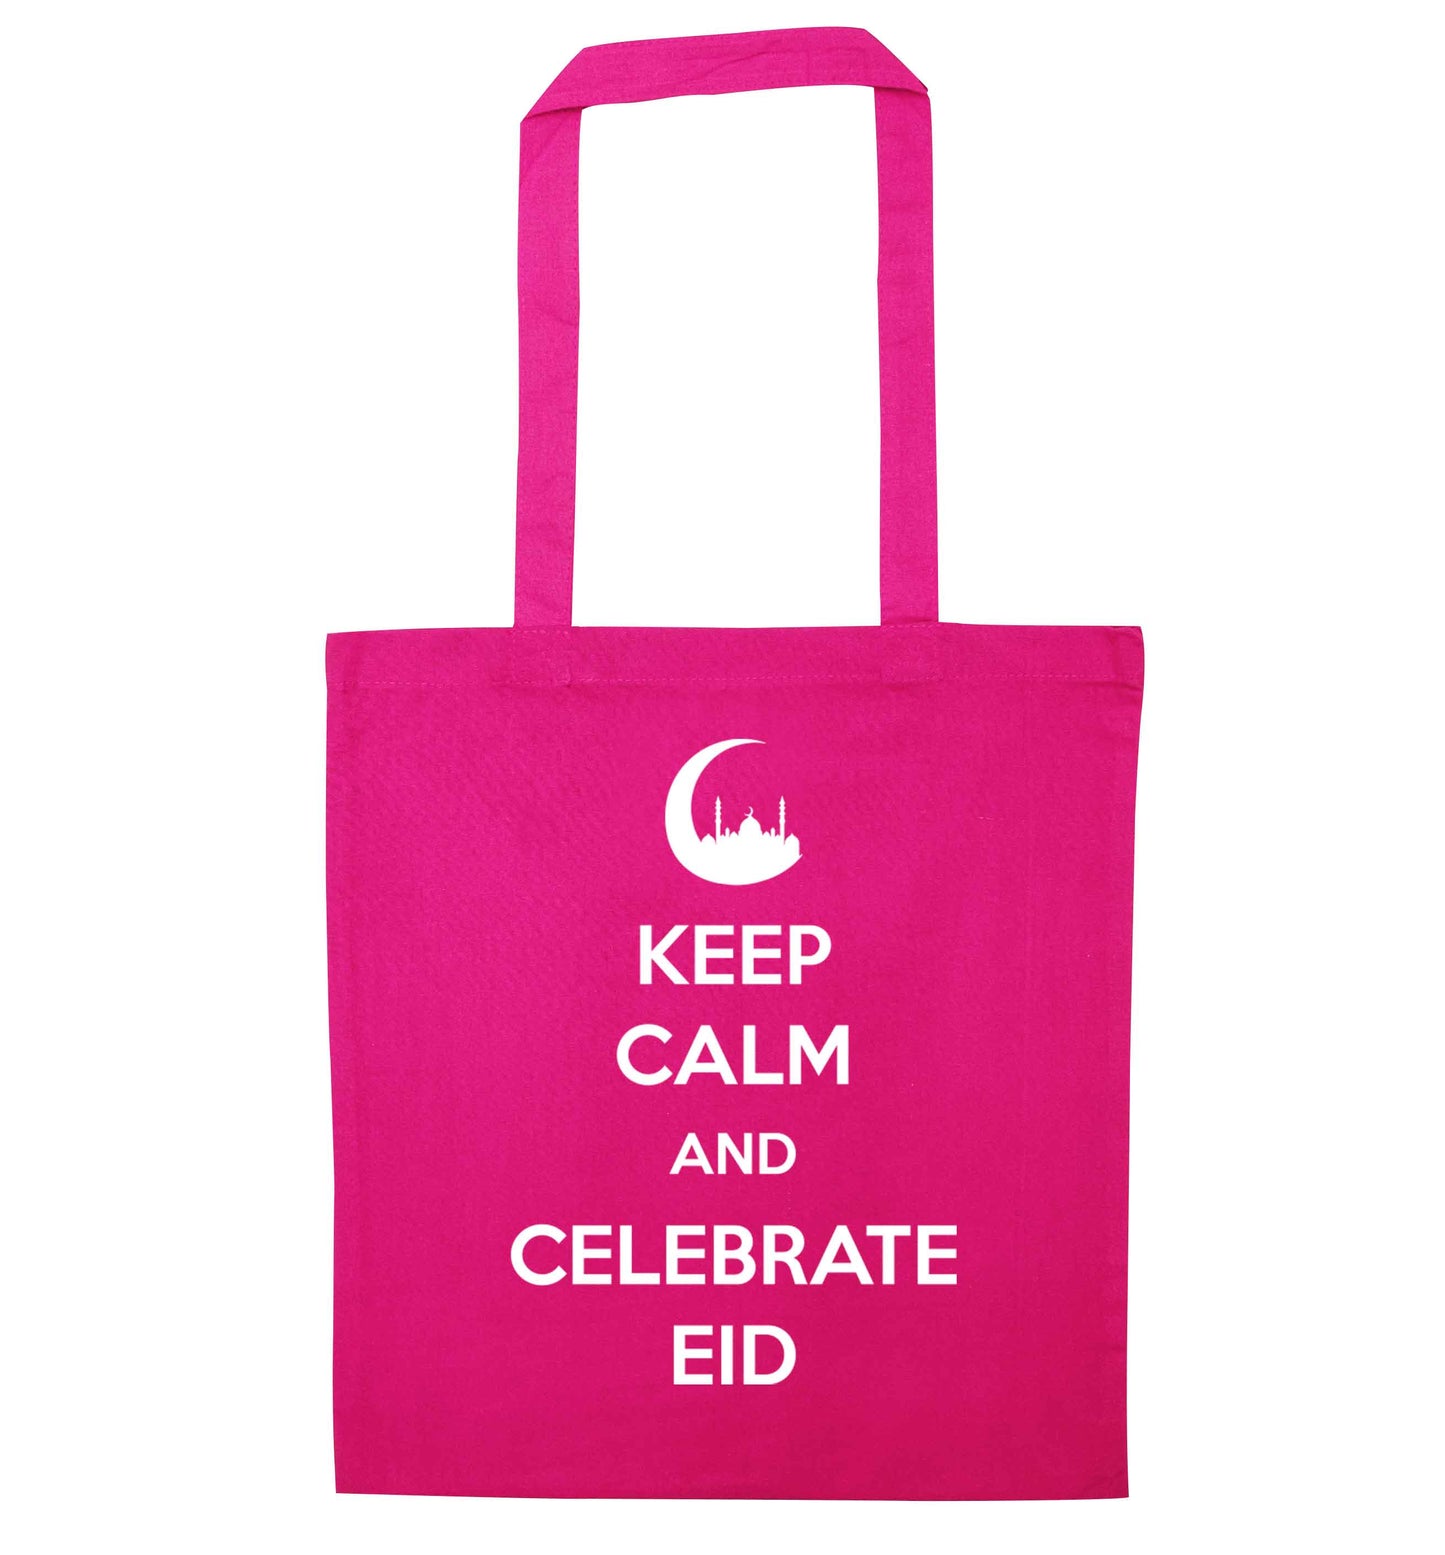 Keep calm and celebrate Eid pink tote bag